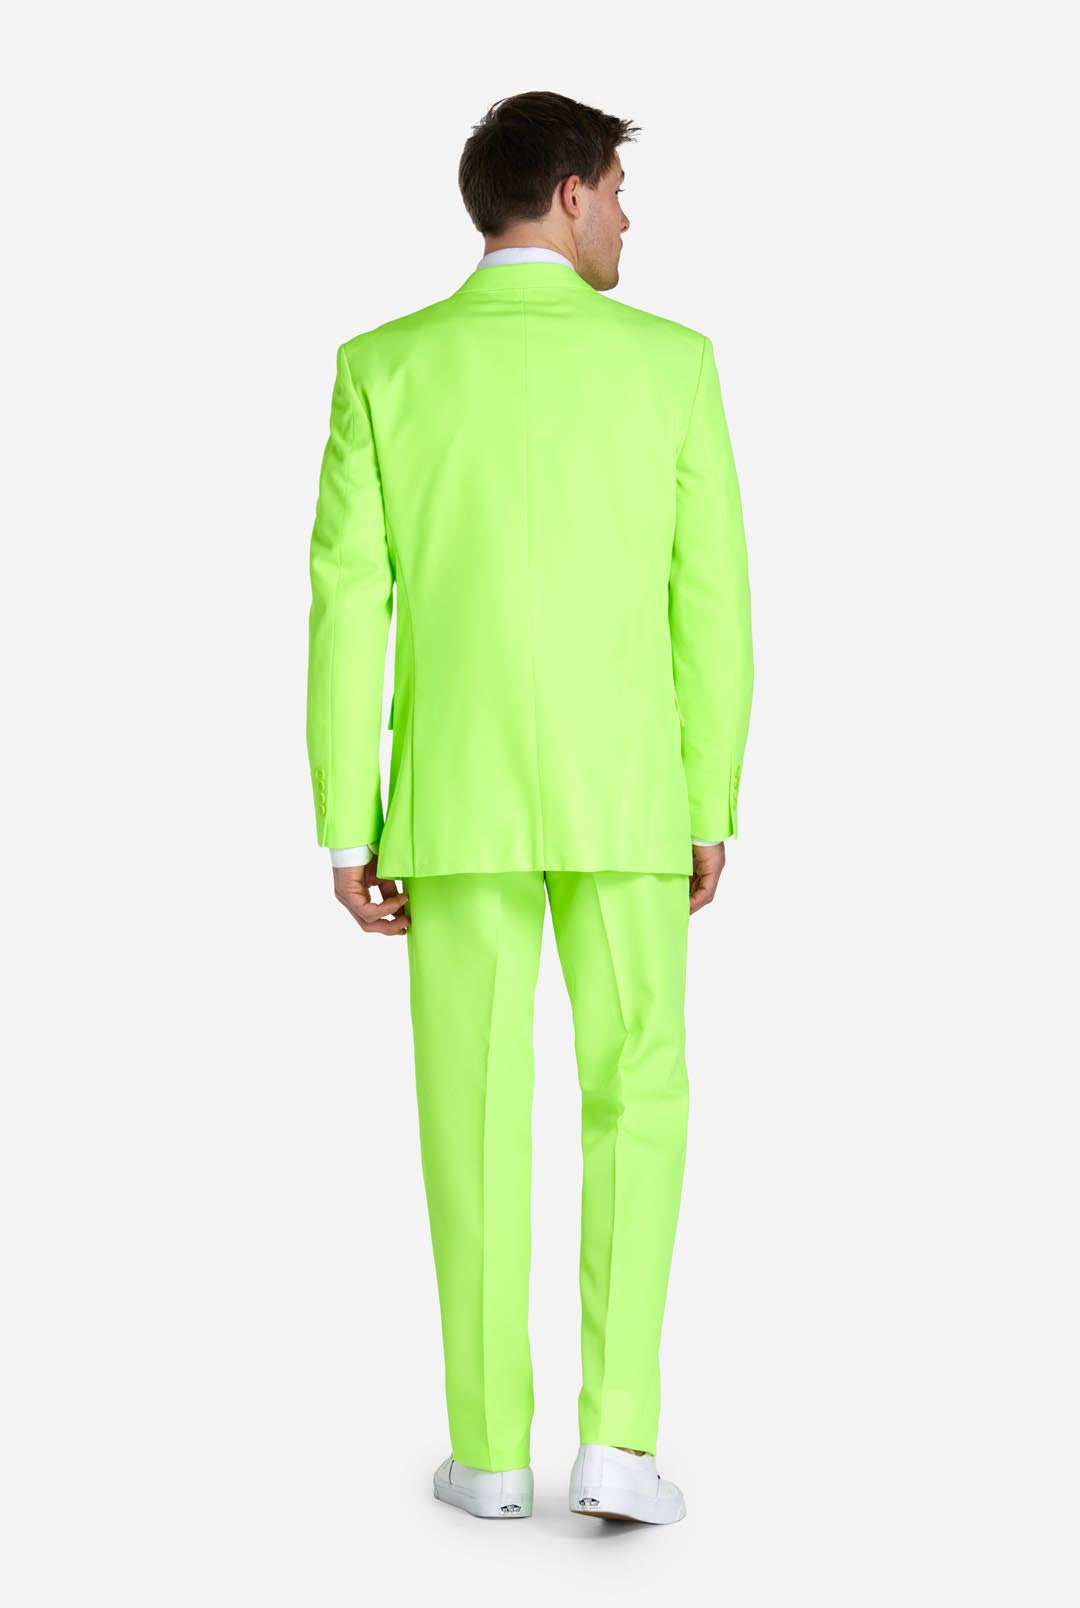 Suit modern green boyfriend, Mario Moyano 2501